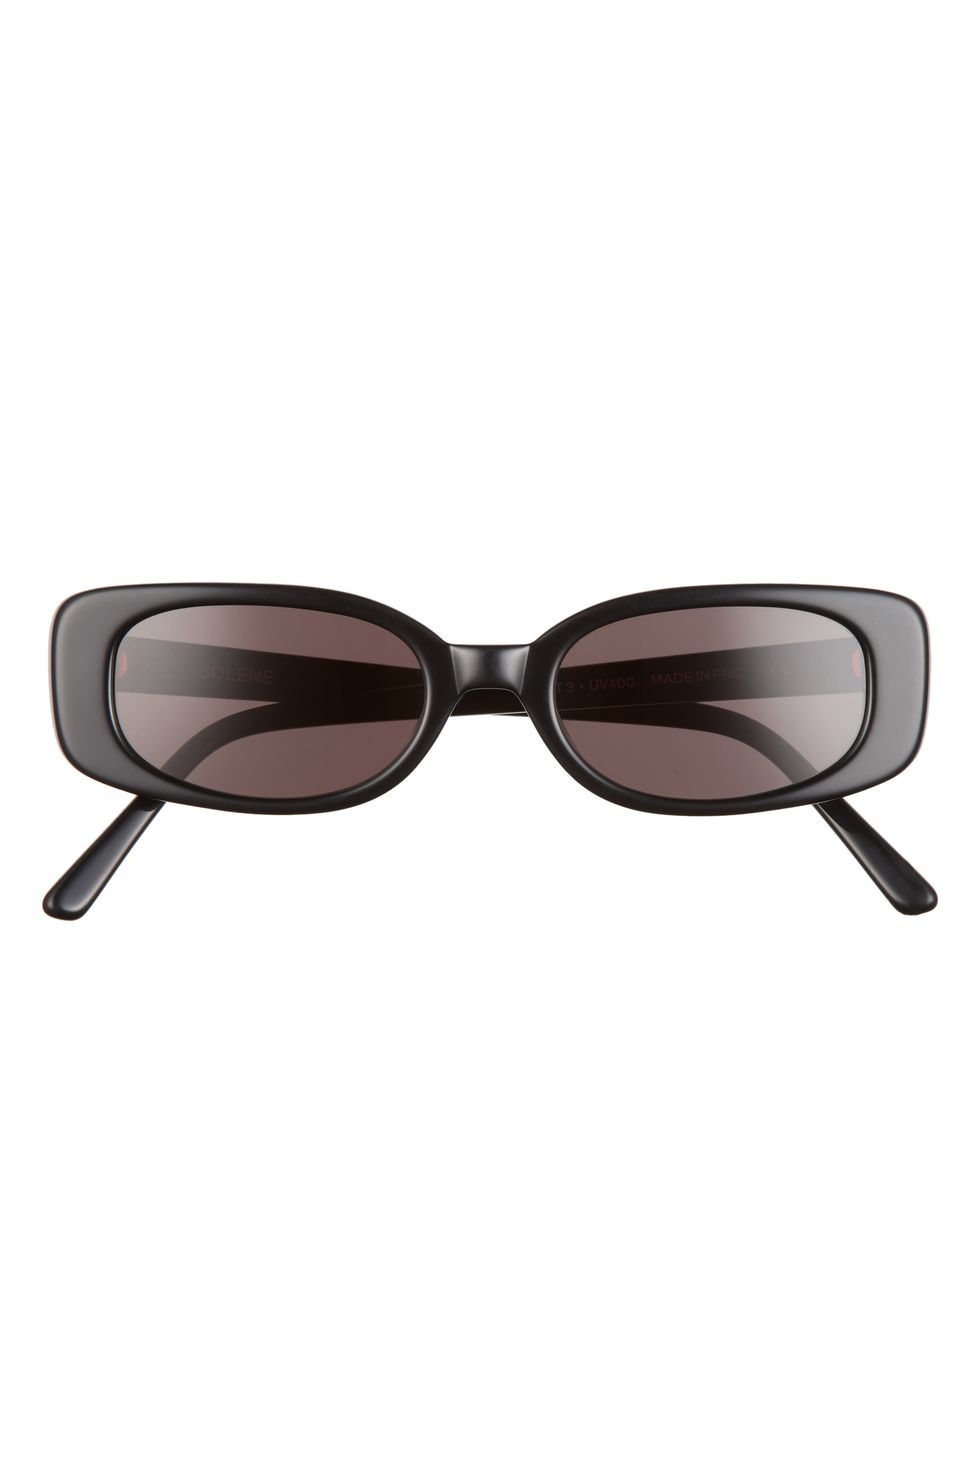 Solene 56mm Rectangular Sunglasses